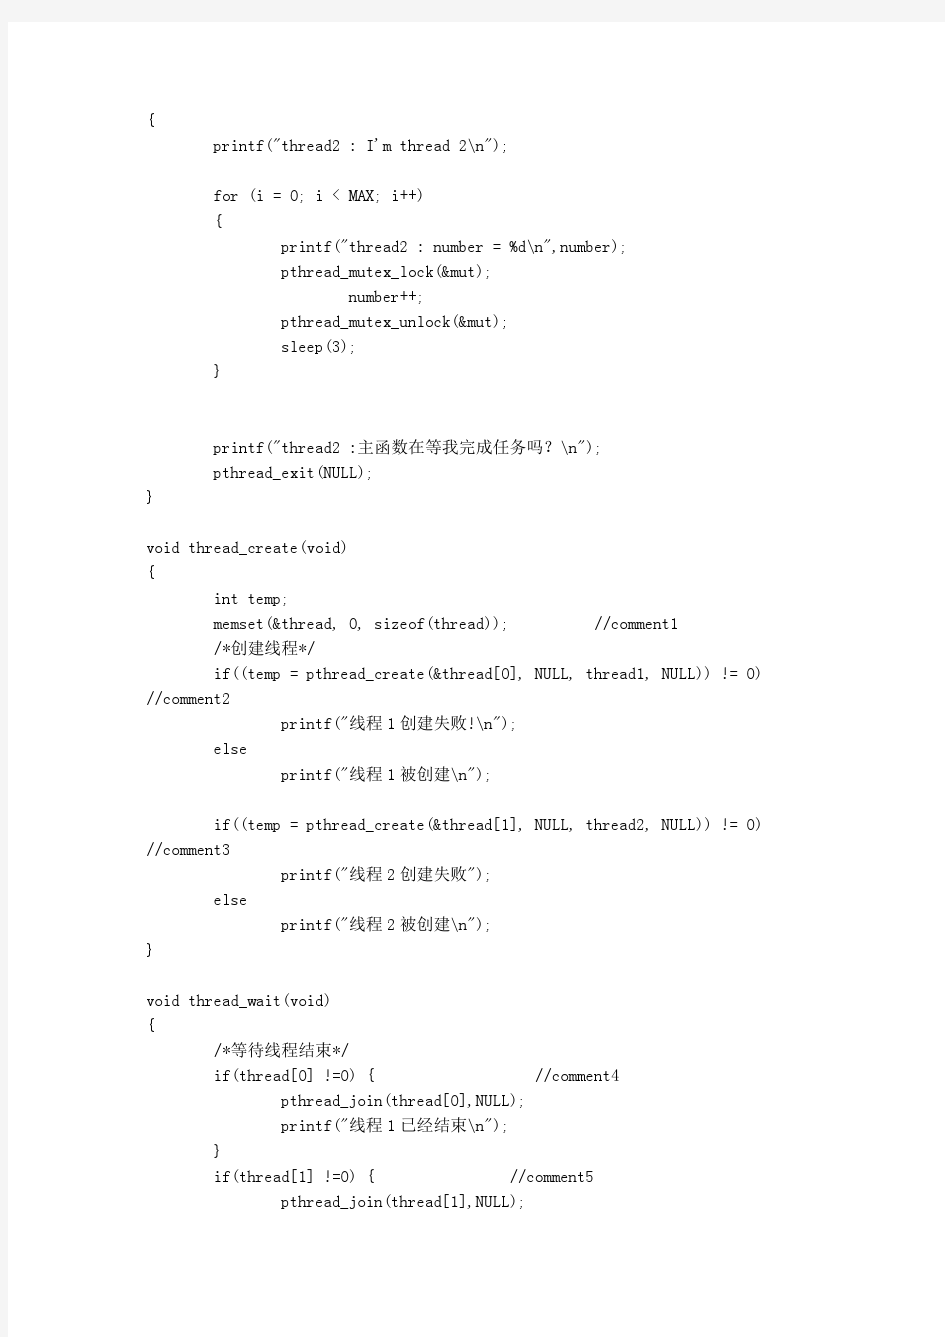 linux 下多线程编程 ( C 语言编程)